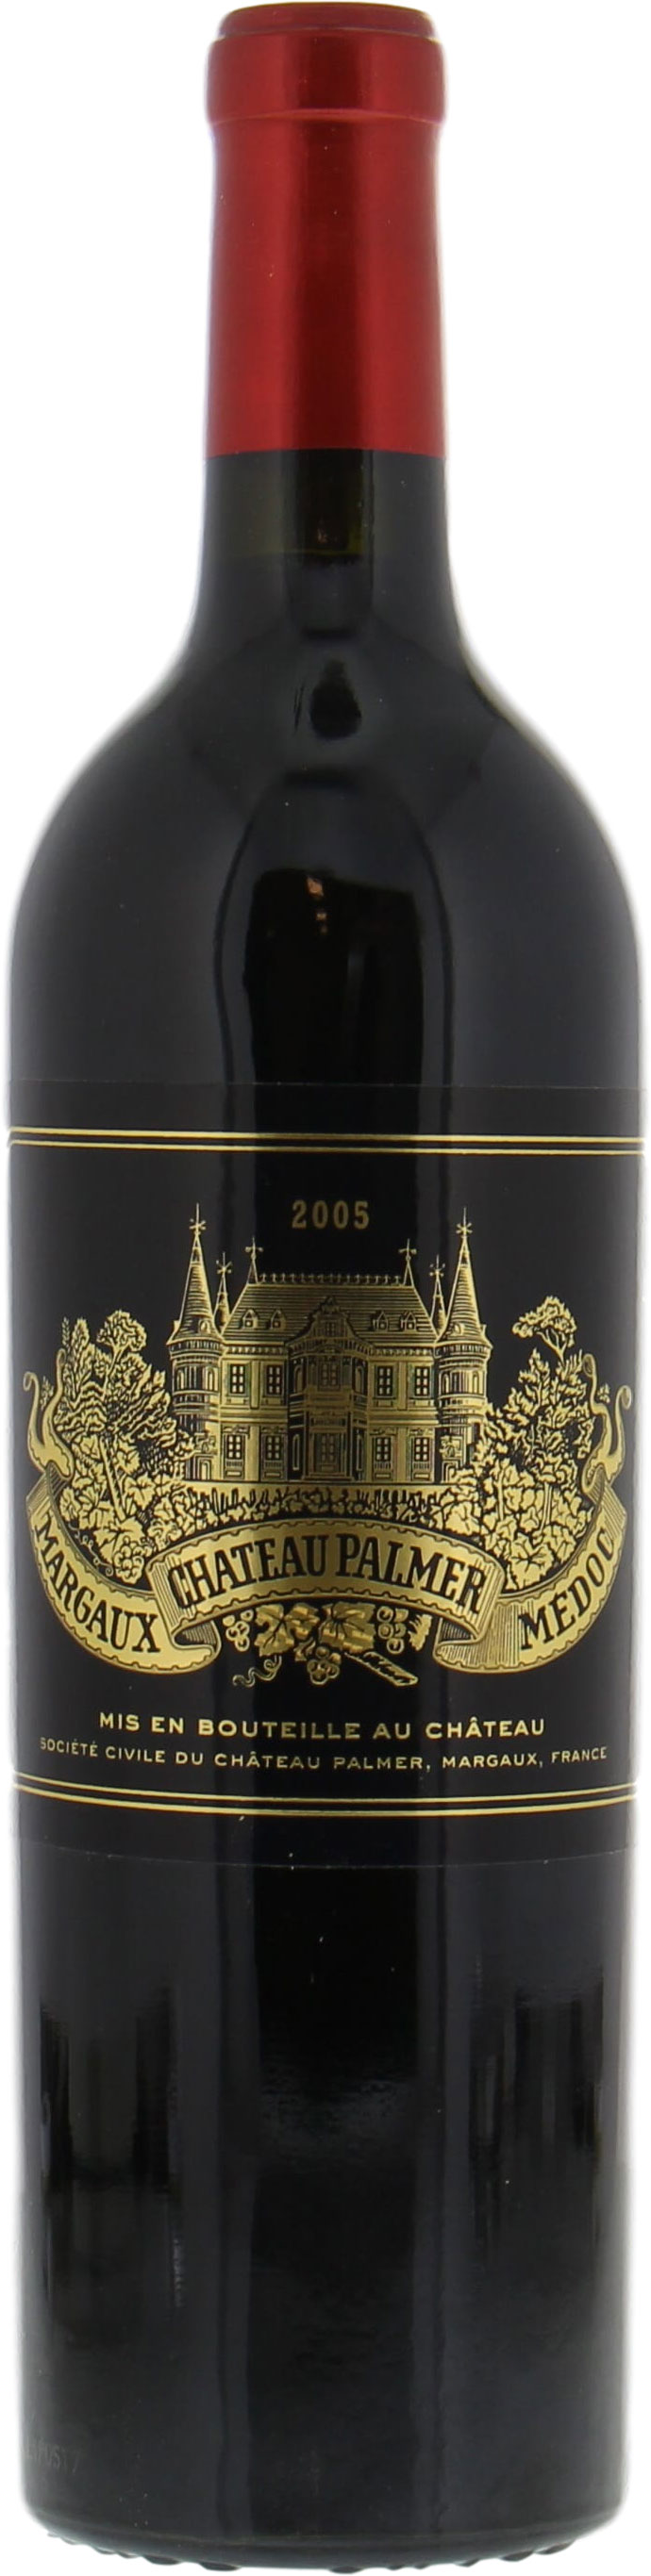 Chateau Palmer - Chateau Palmer 2005 Perfect